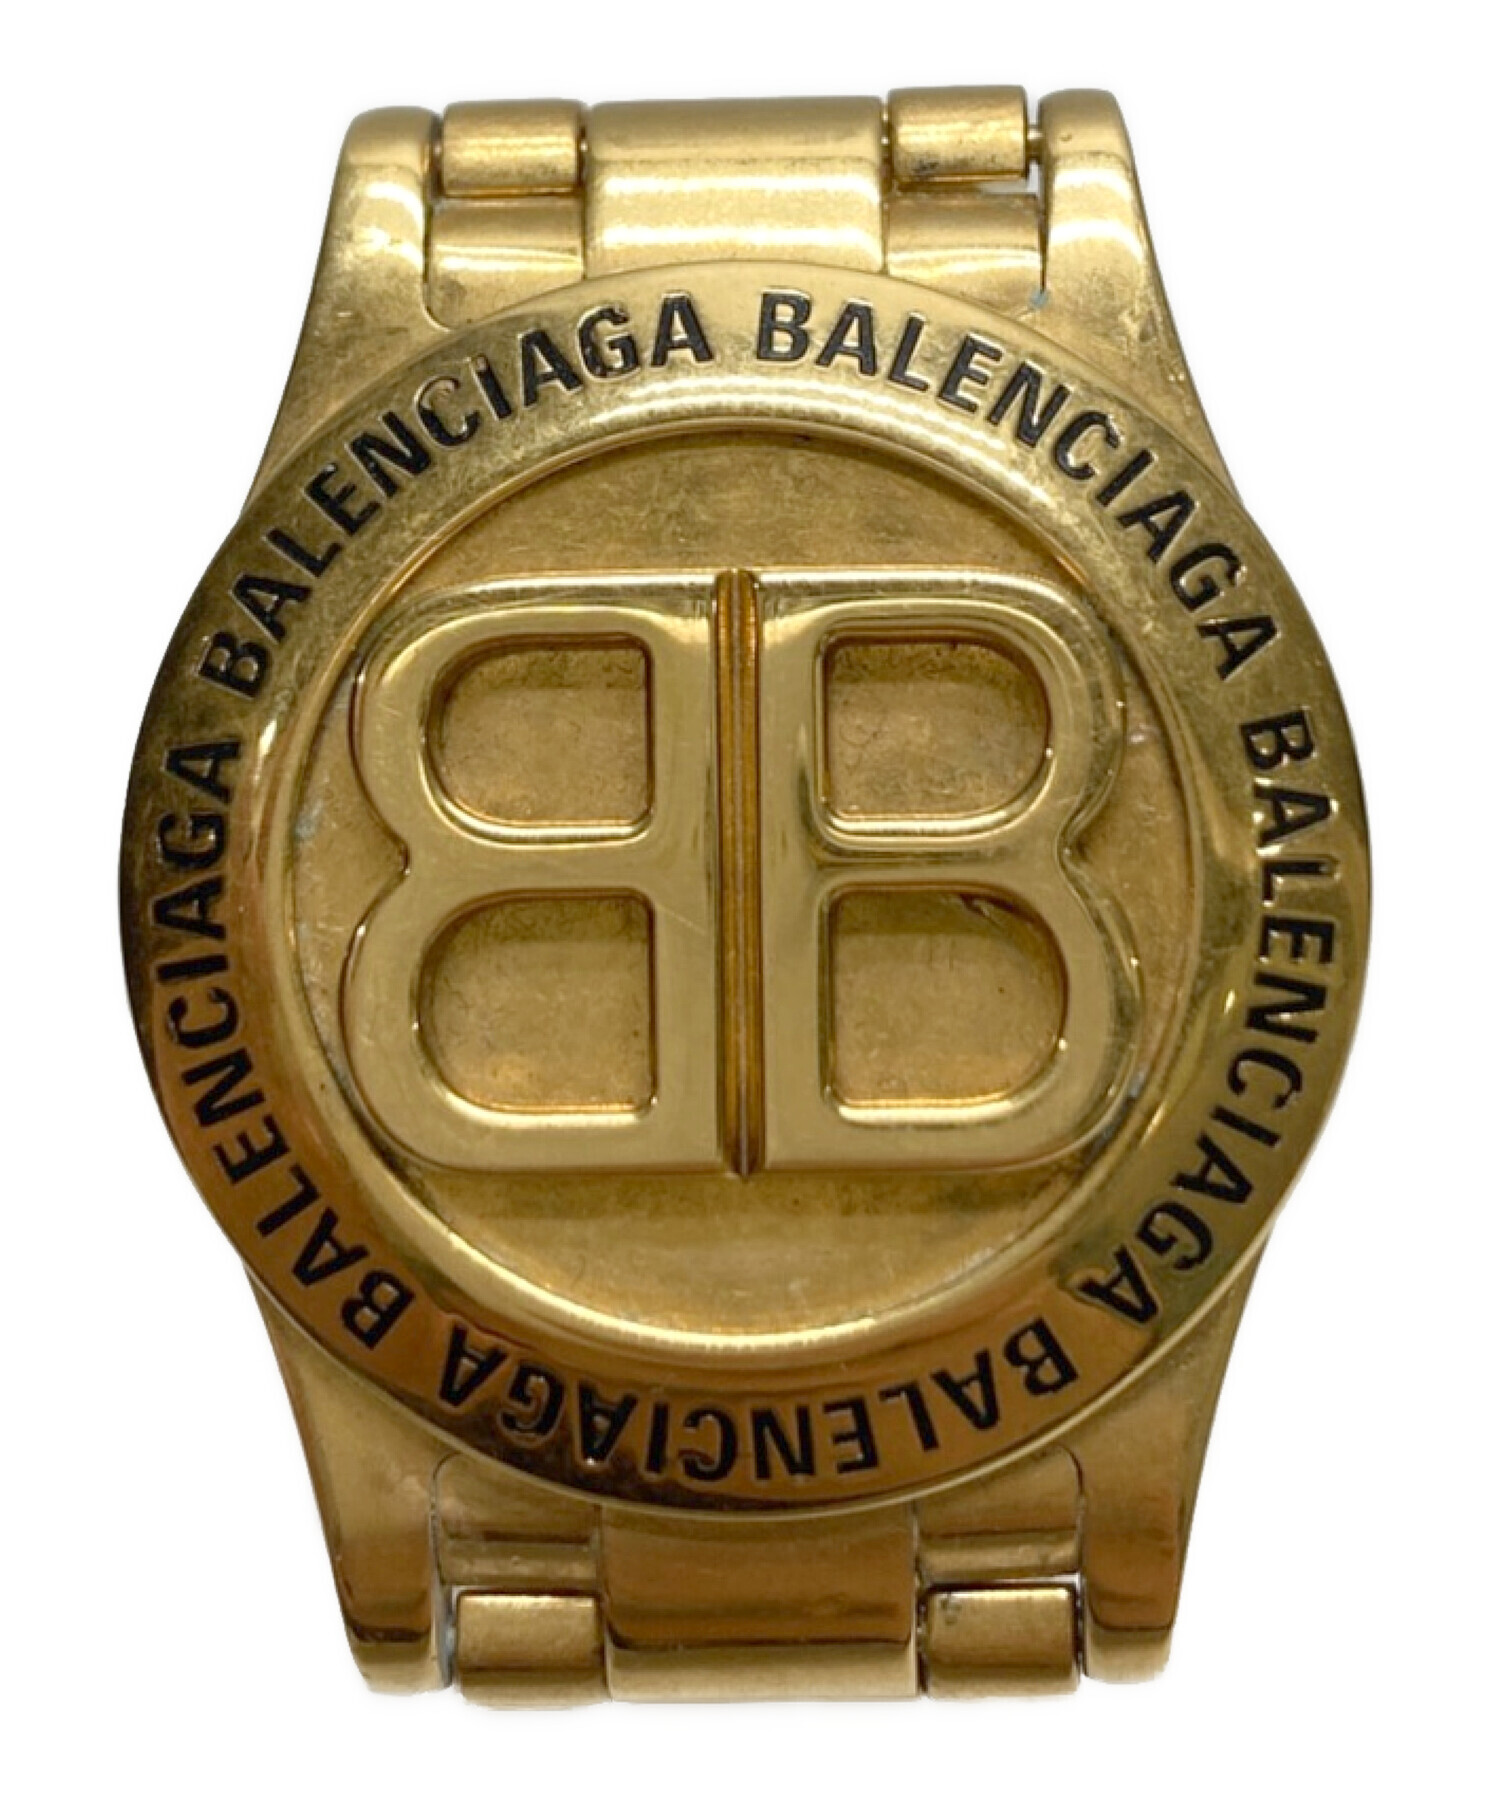 BALENCIAGA (バレンシアガ) Time Bracelet ゴールド